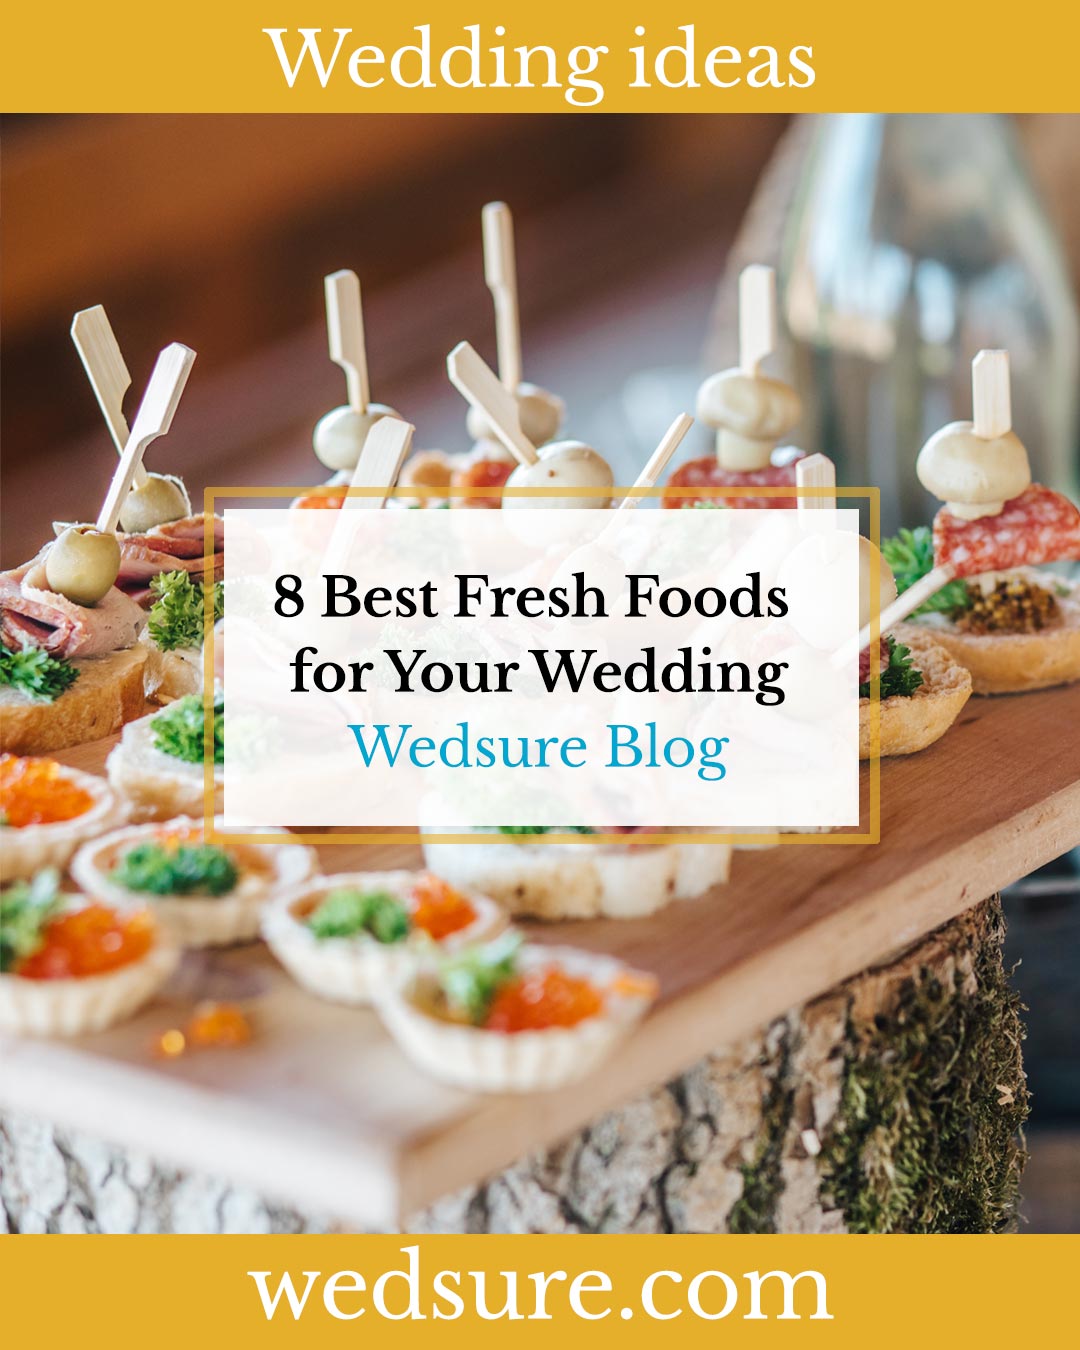 8 Best Fresh Foods for Your Wedding - Wedsure.com